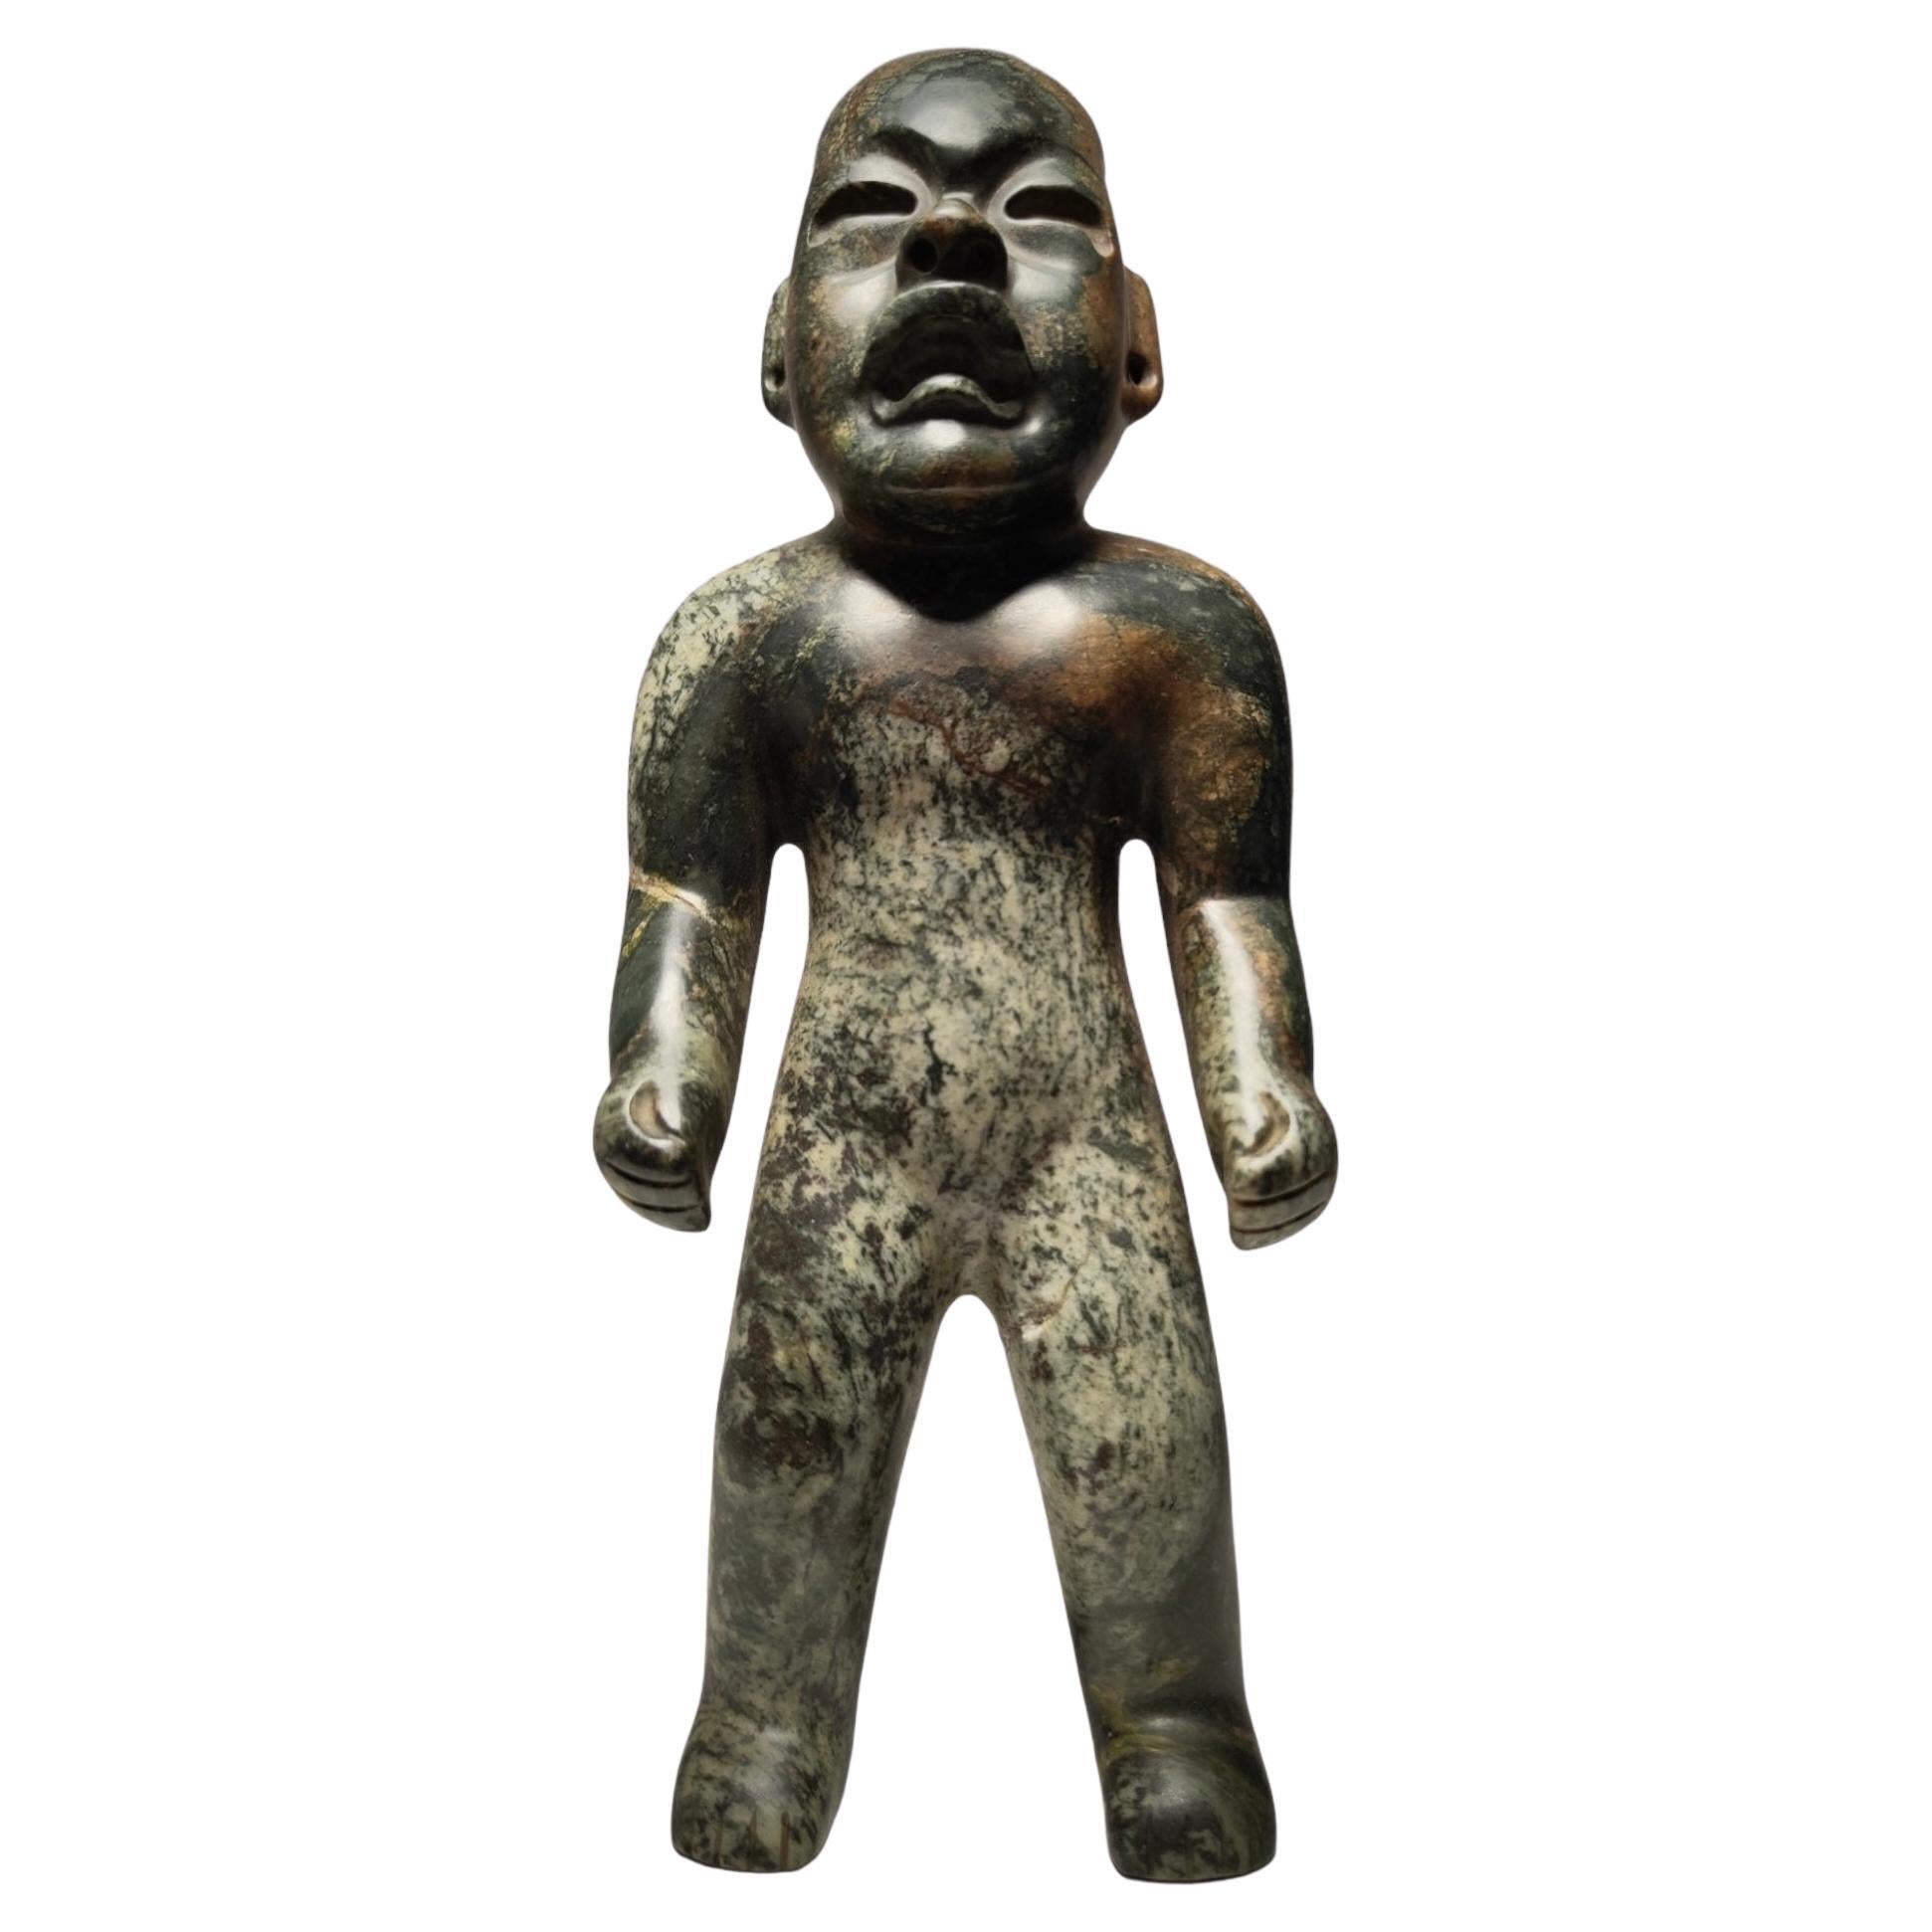 Important Olmec figure of Olmec ethnic dignitary from the preclassic period 